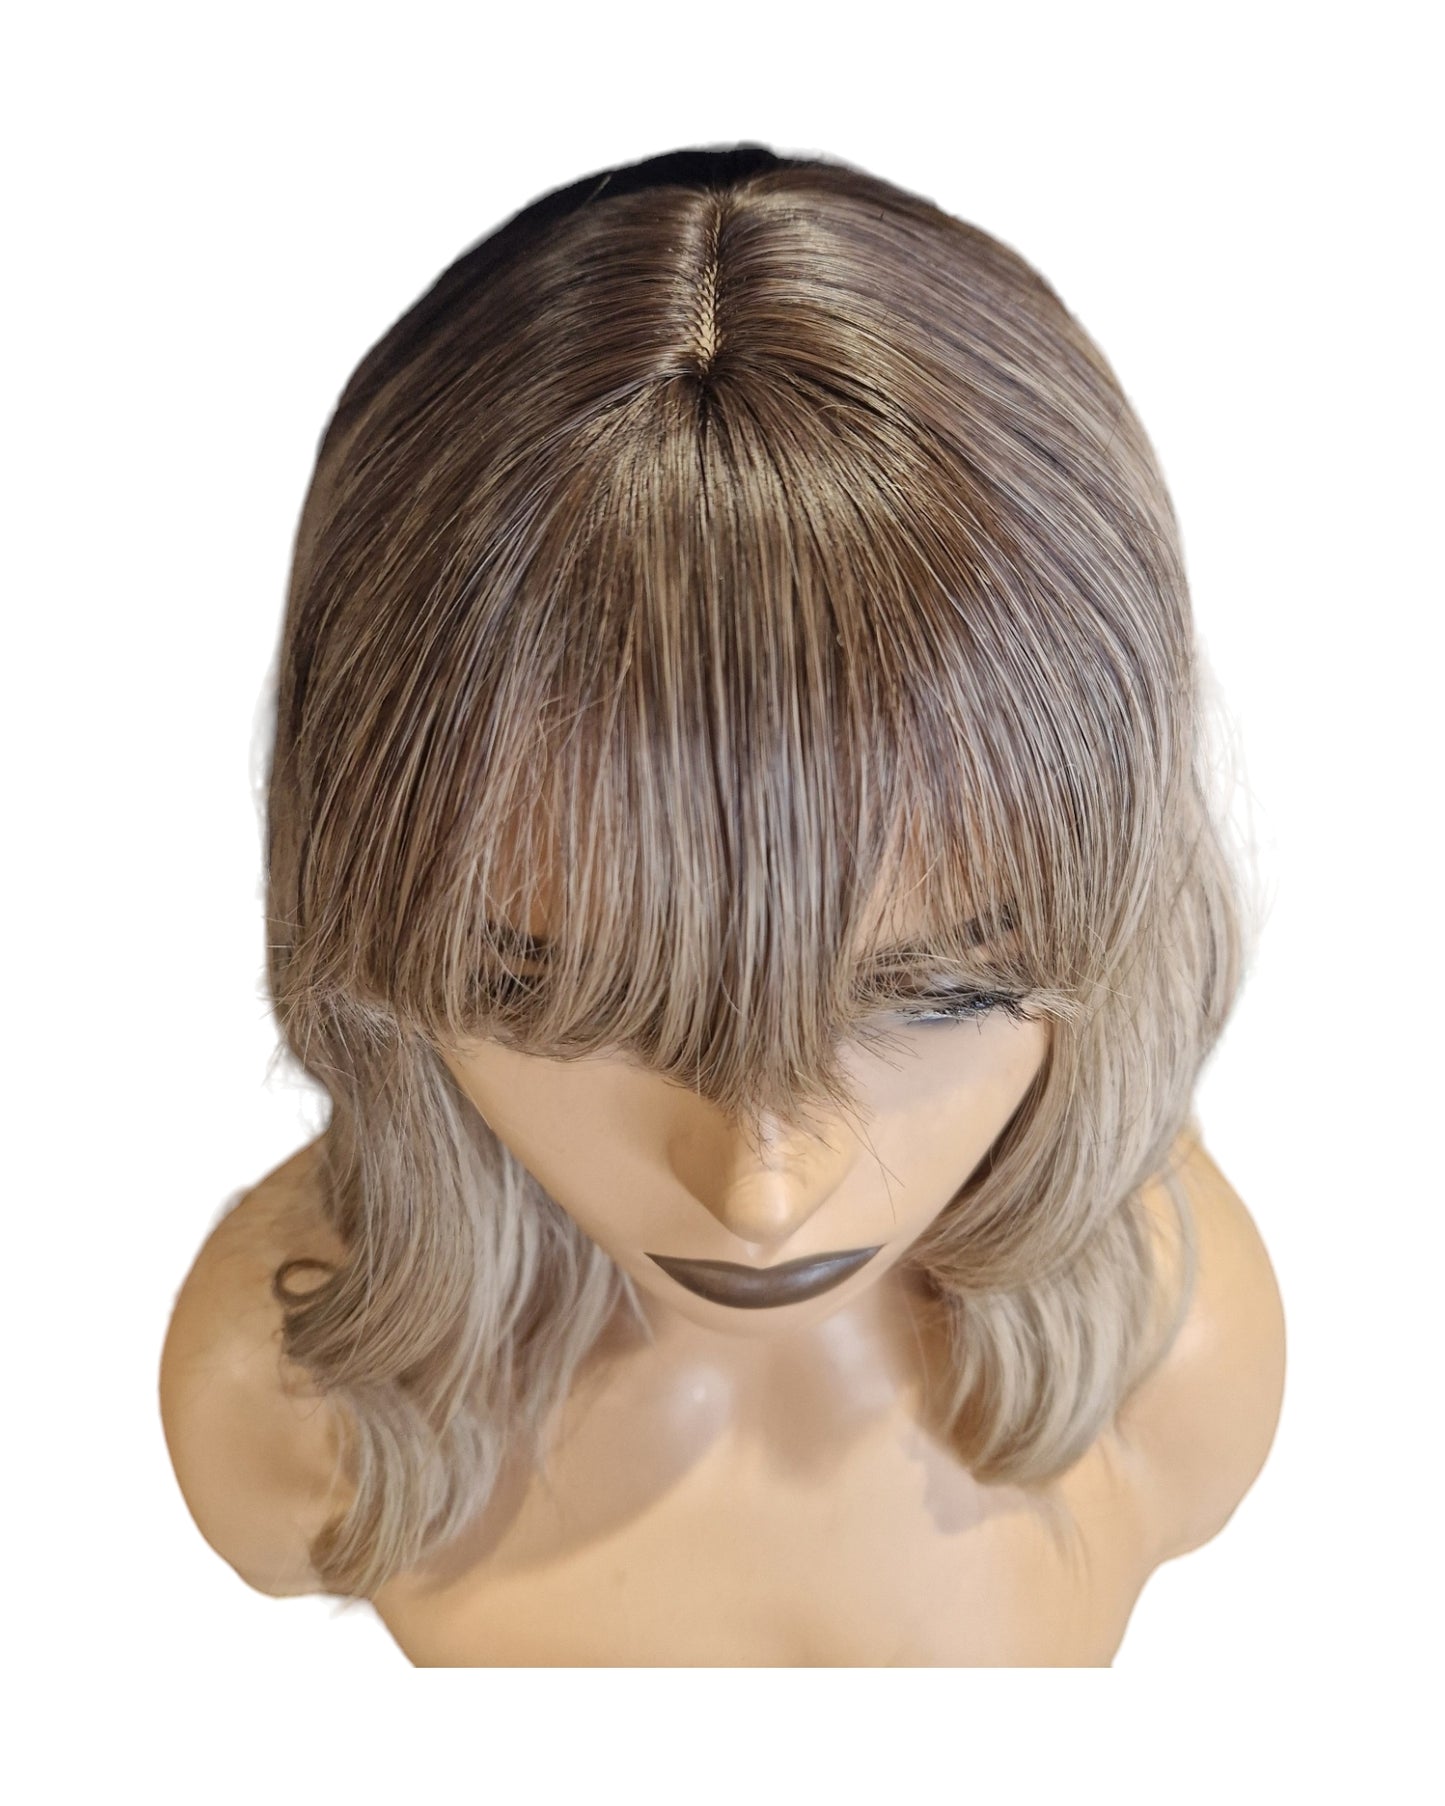 Ash Blonde Textured Wave Wig With Fringe Bangs. Wendi